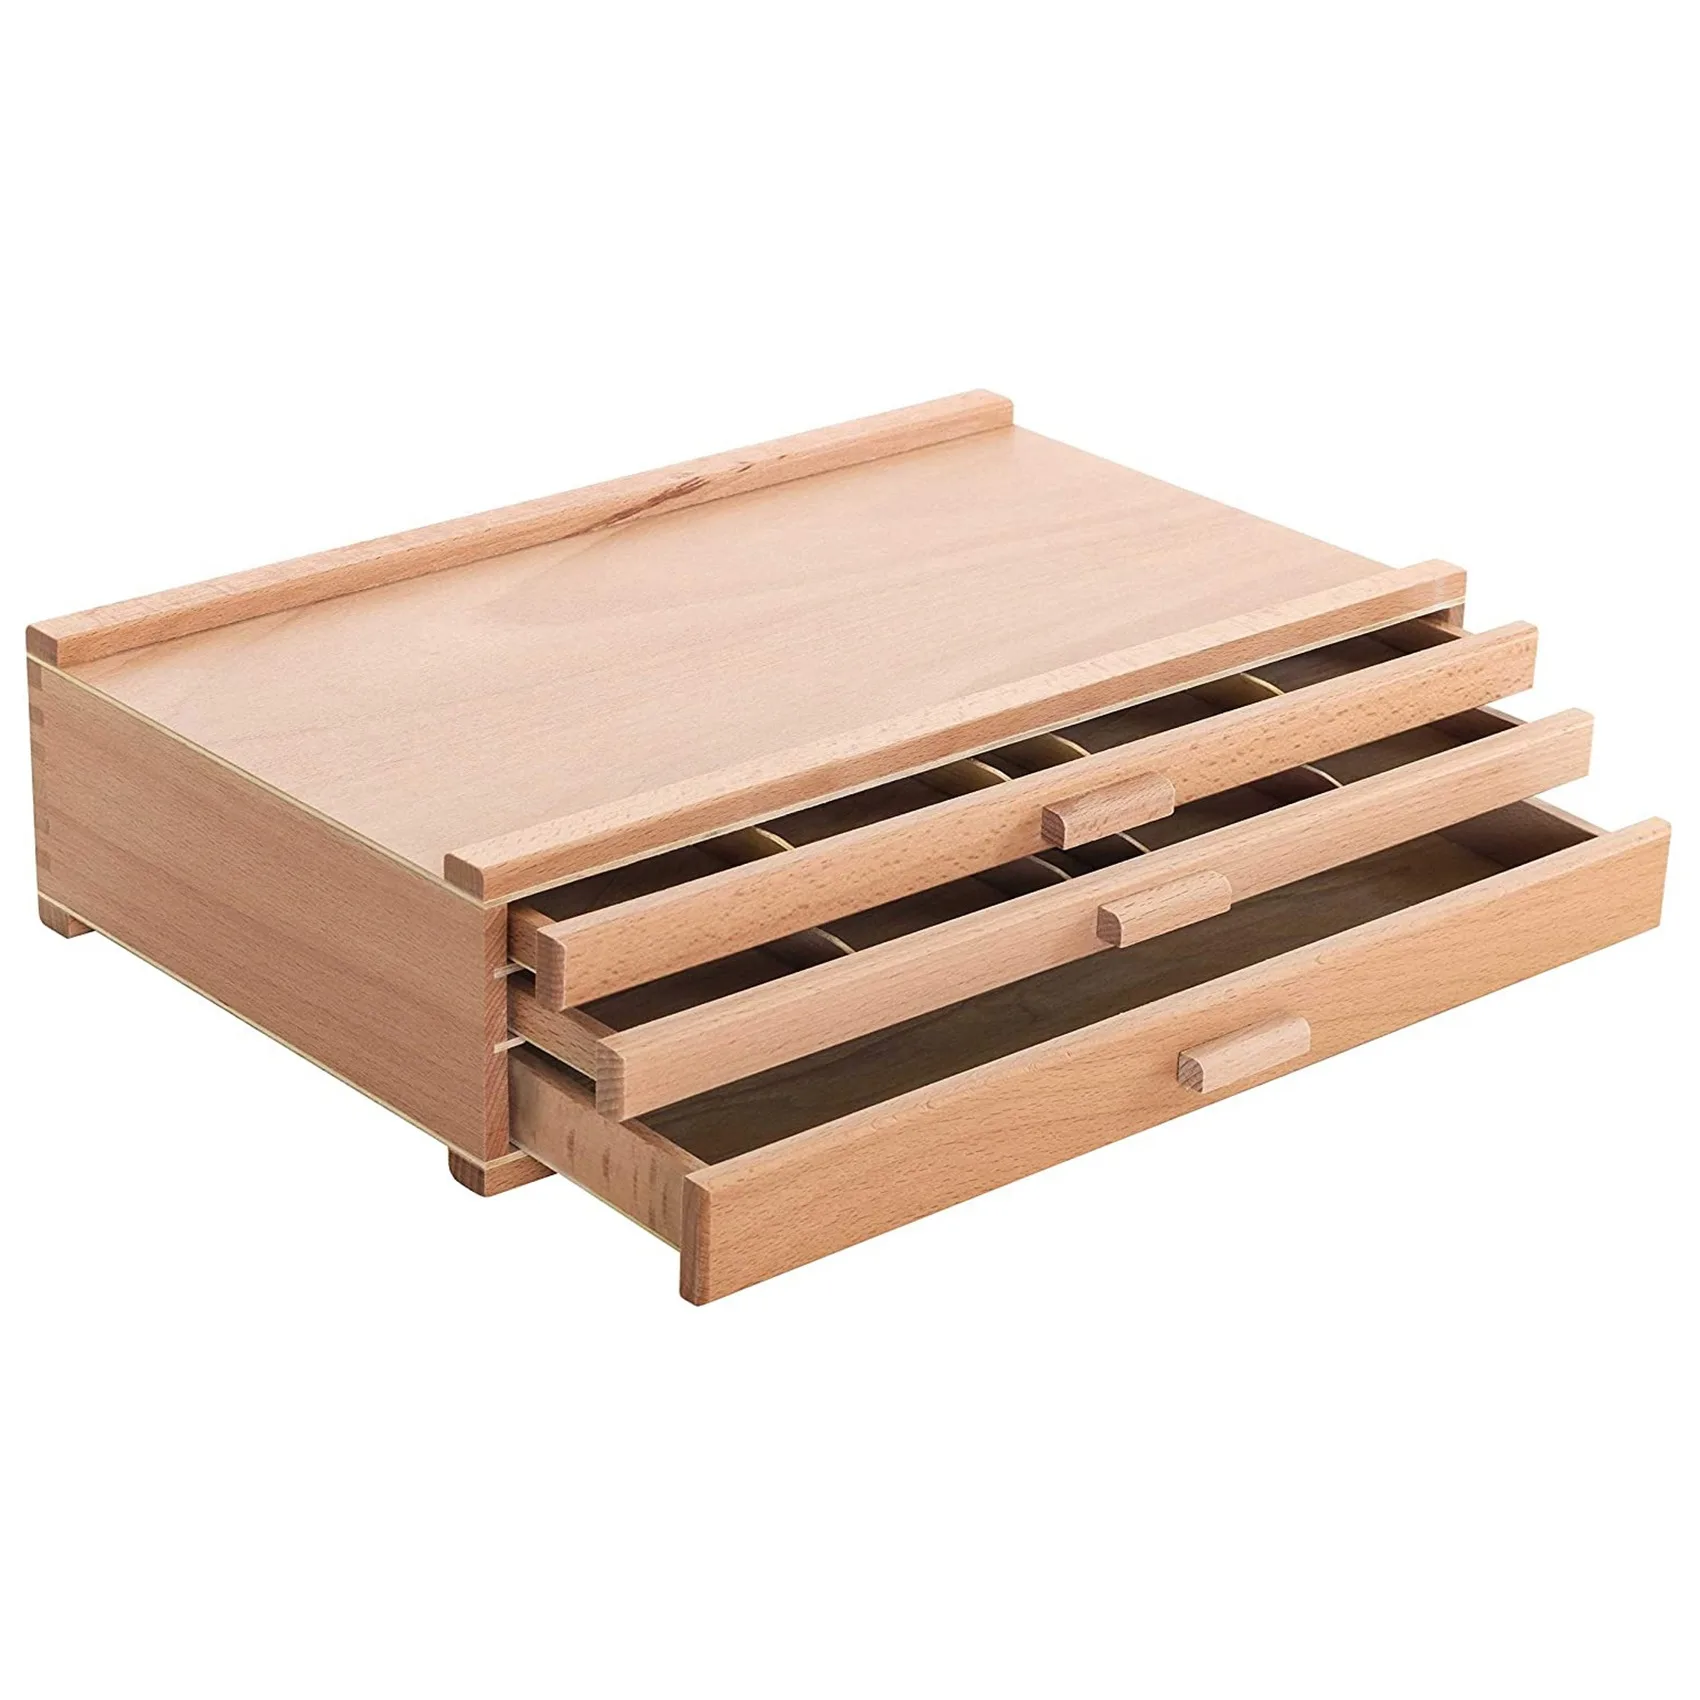 artista-madeira-art-storage-box-3-camadas-gaveta-lapis-caneta-pastel-marcador-setstorage-box-for-student-painting-tool